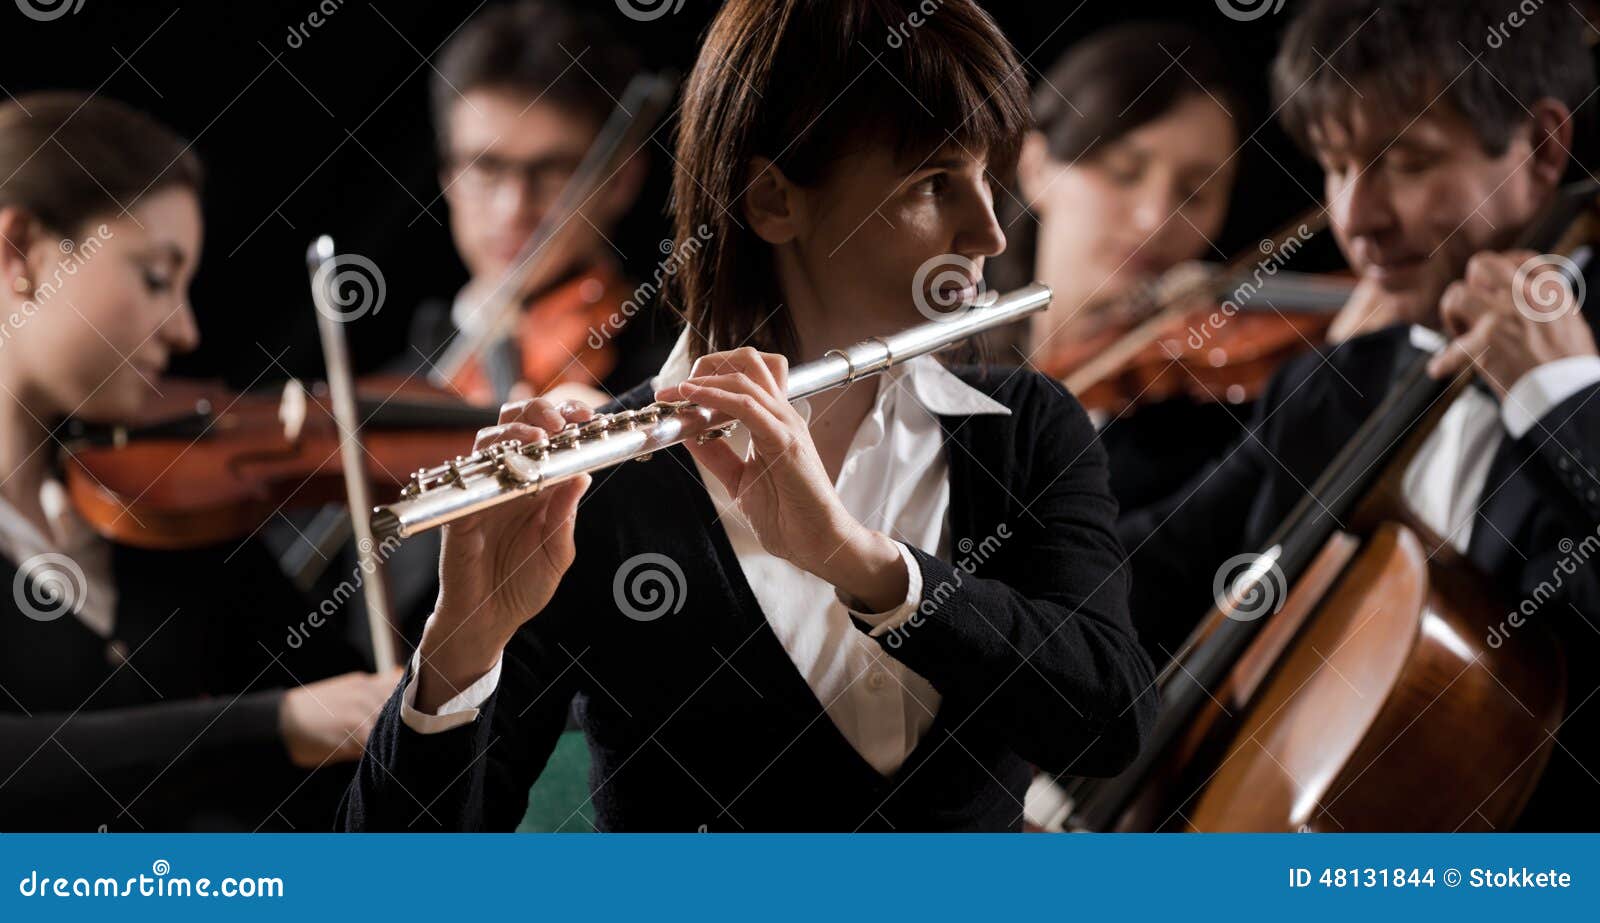 classical music concert: flutist close-up